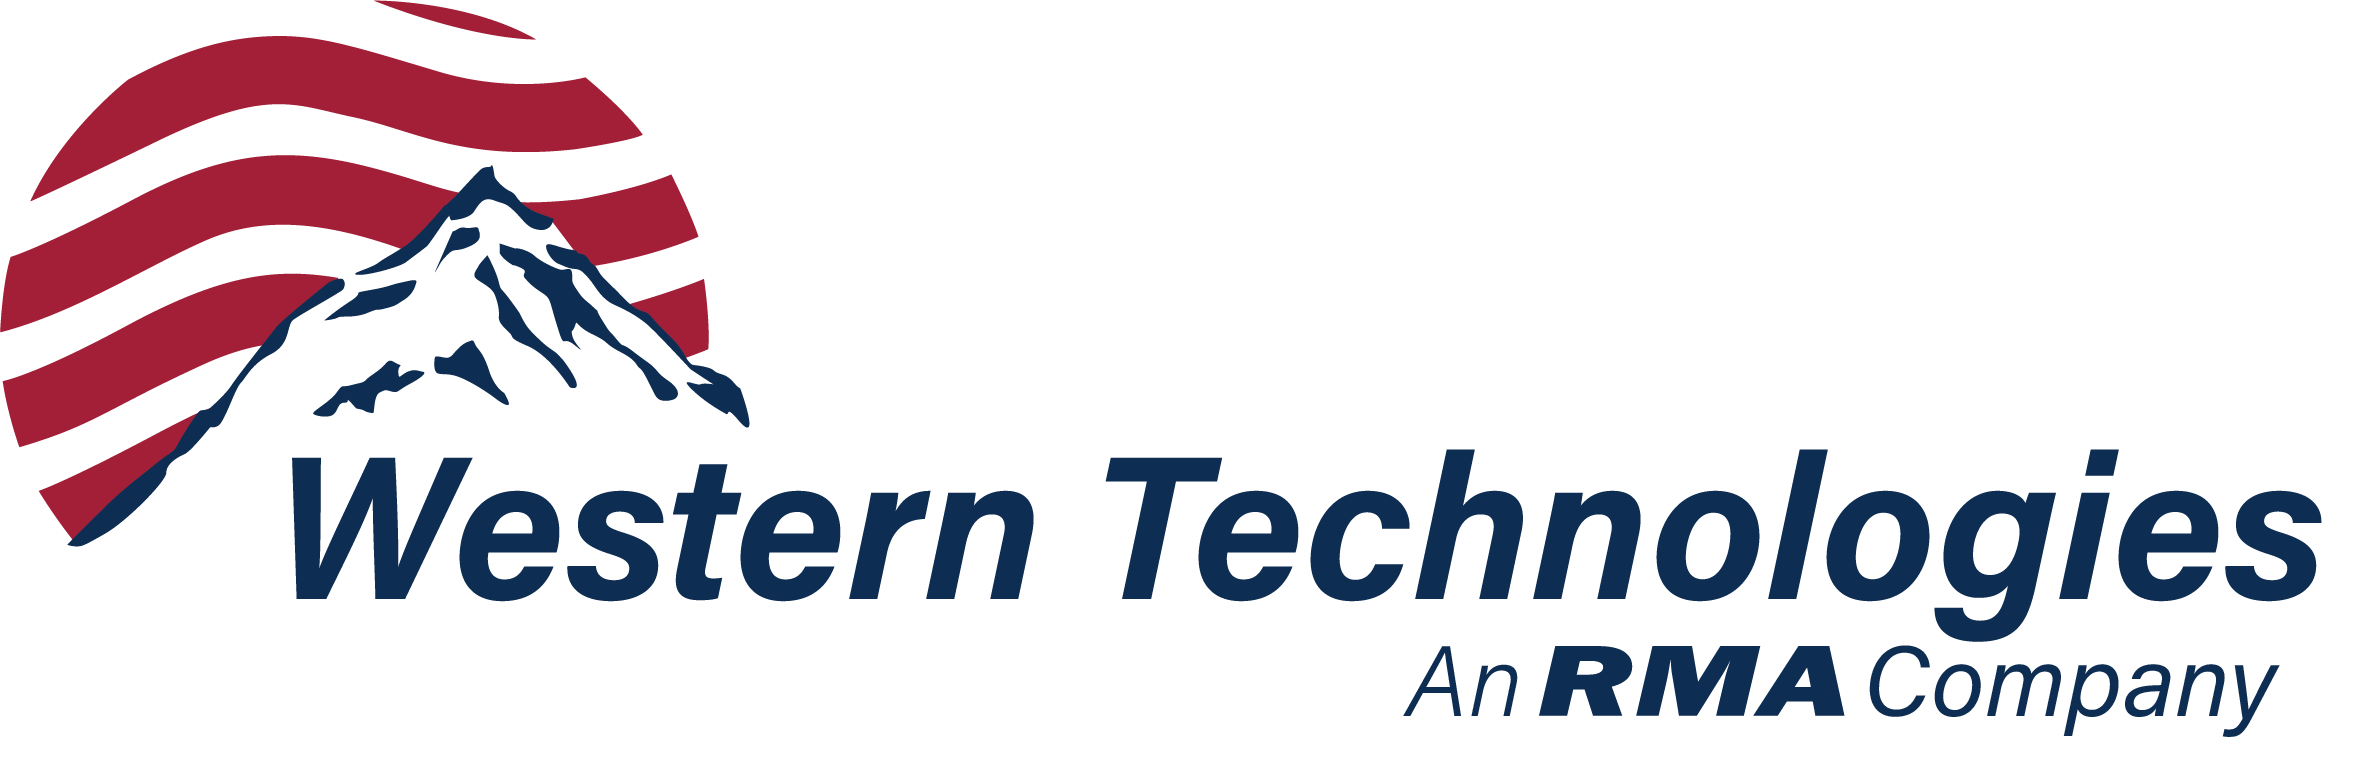 Western Technologies logo